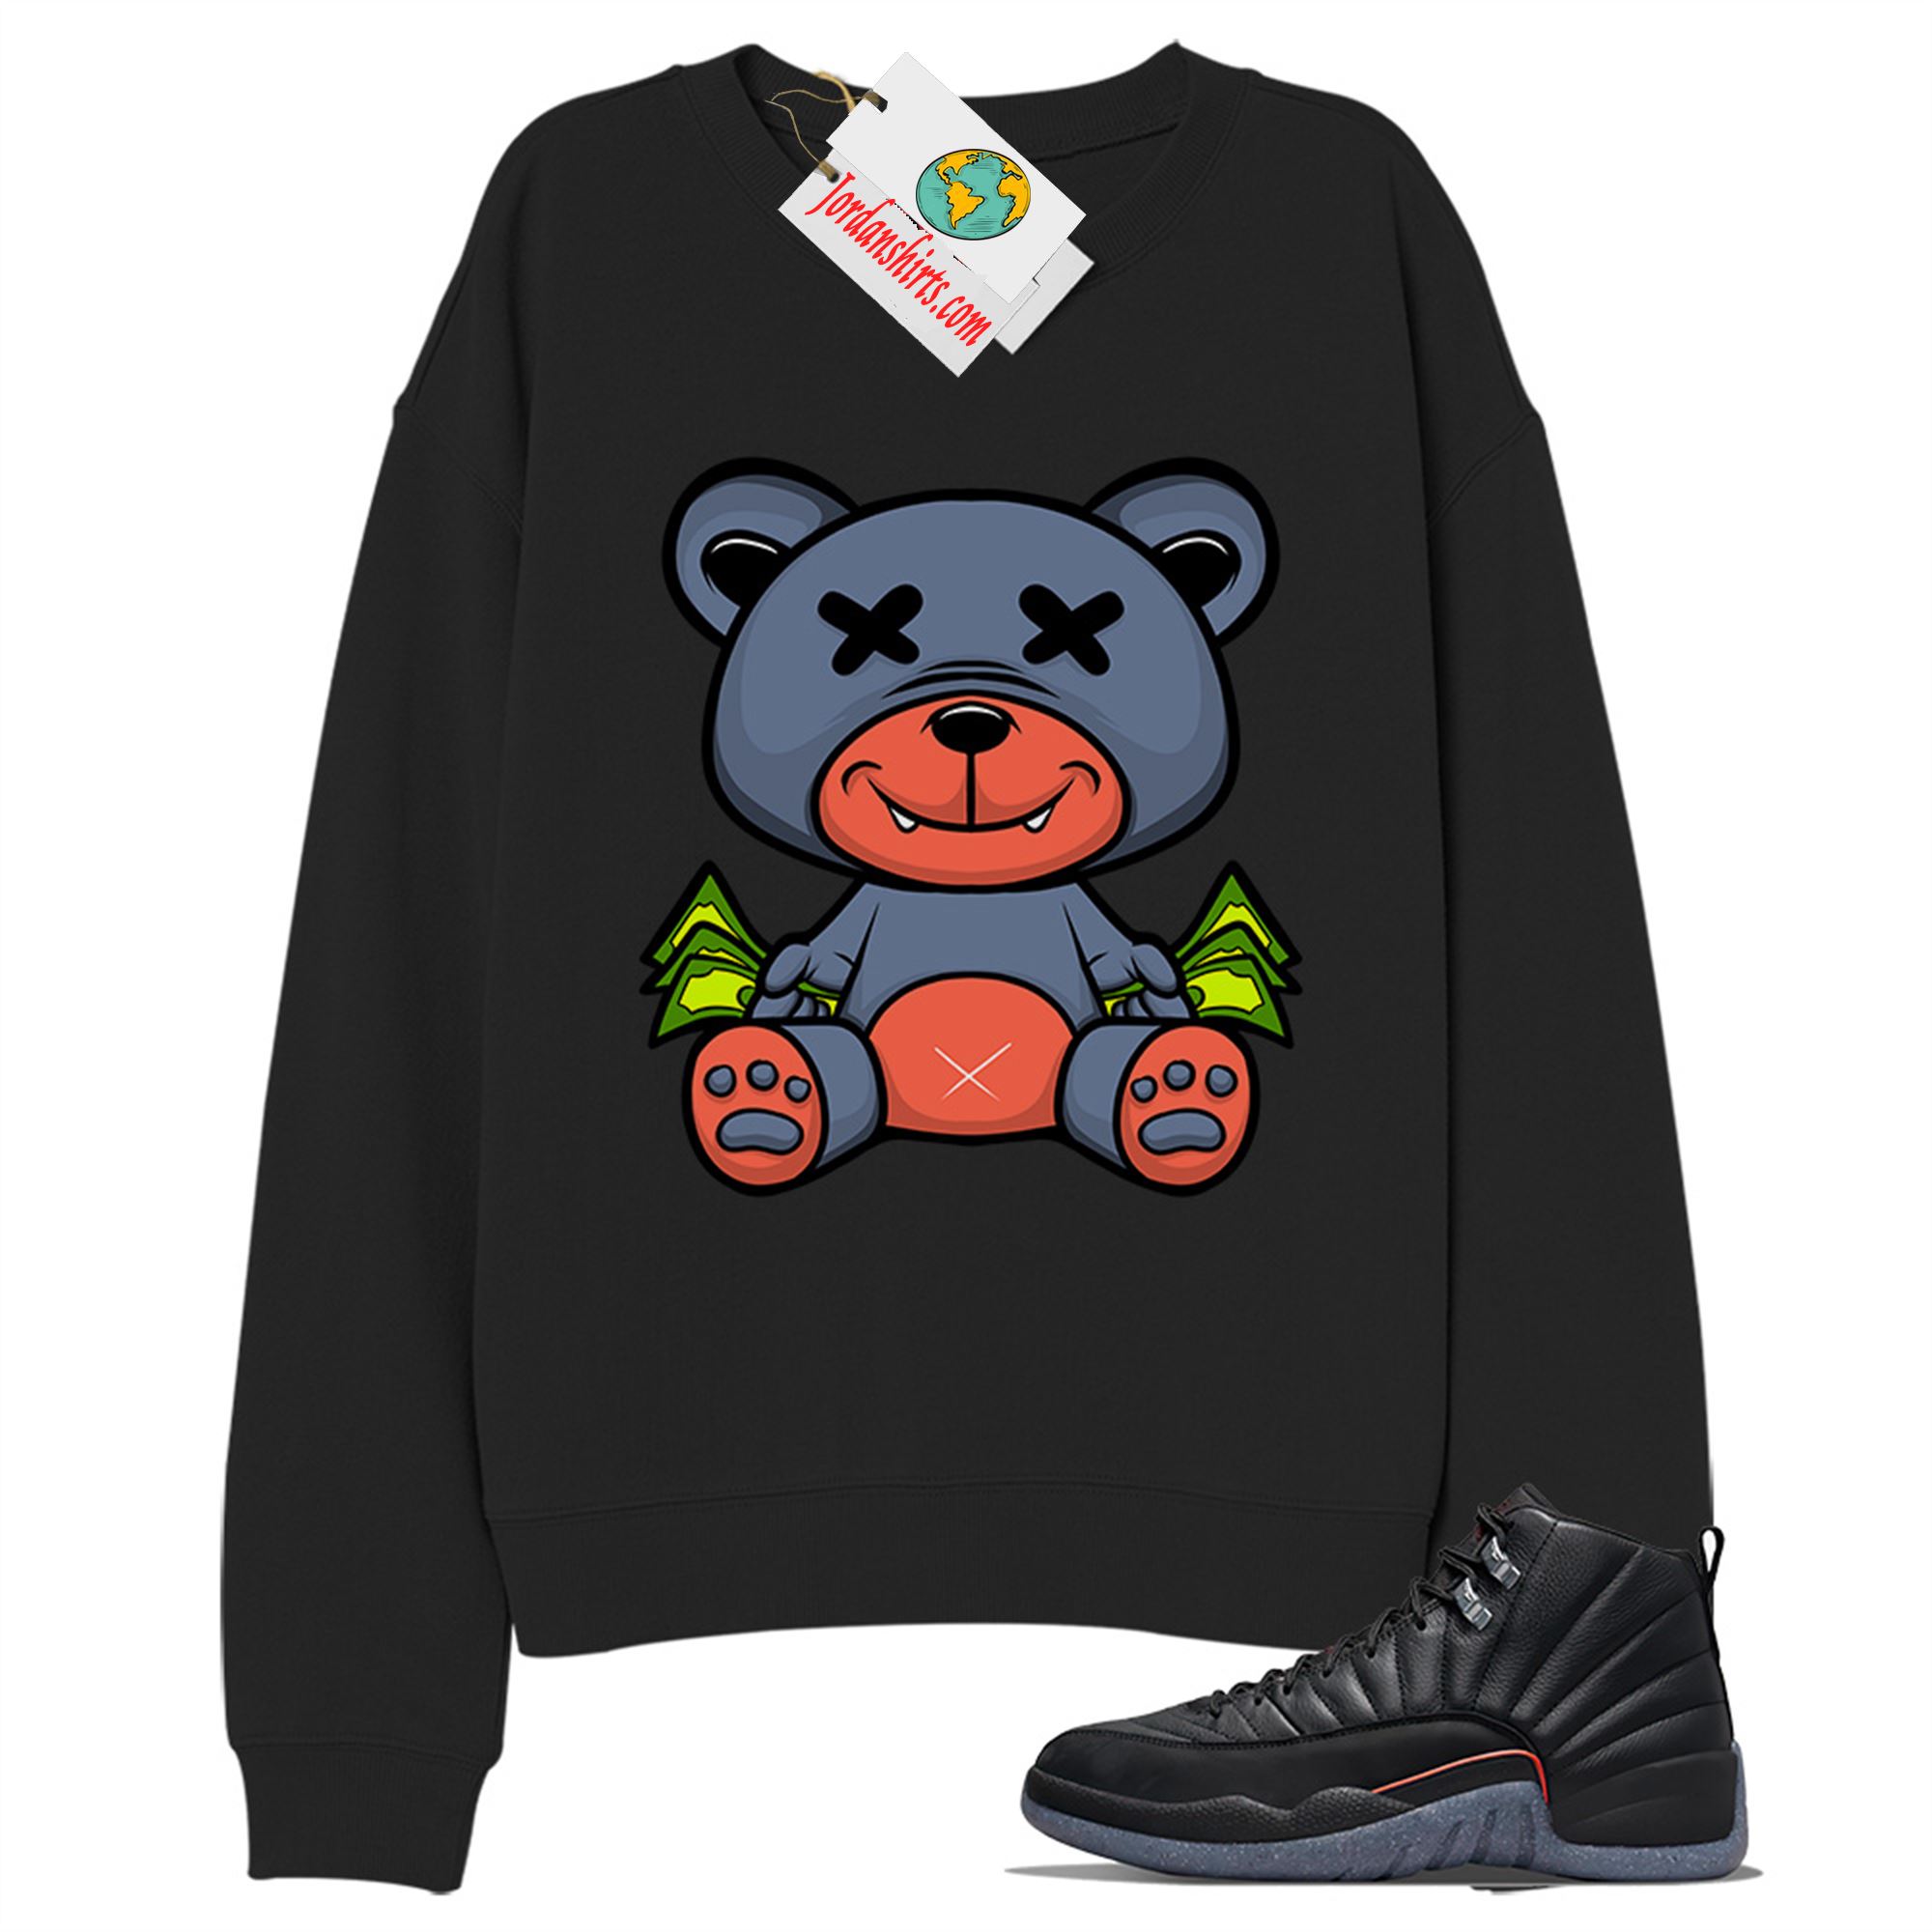 Jordan 12 Sweatshirt, Rich Teddy Bear Black Sweatshirt Air Jordan 12 Utility Grind 12s Full Size Up To 5xl